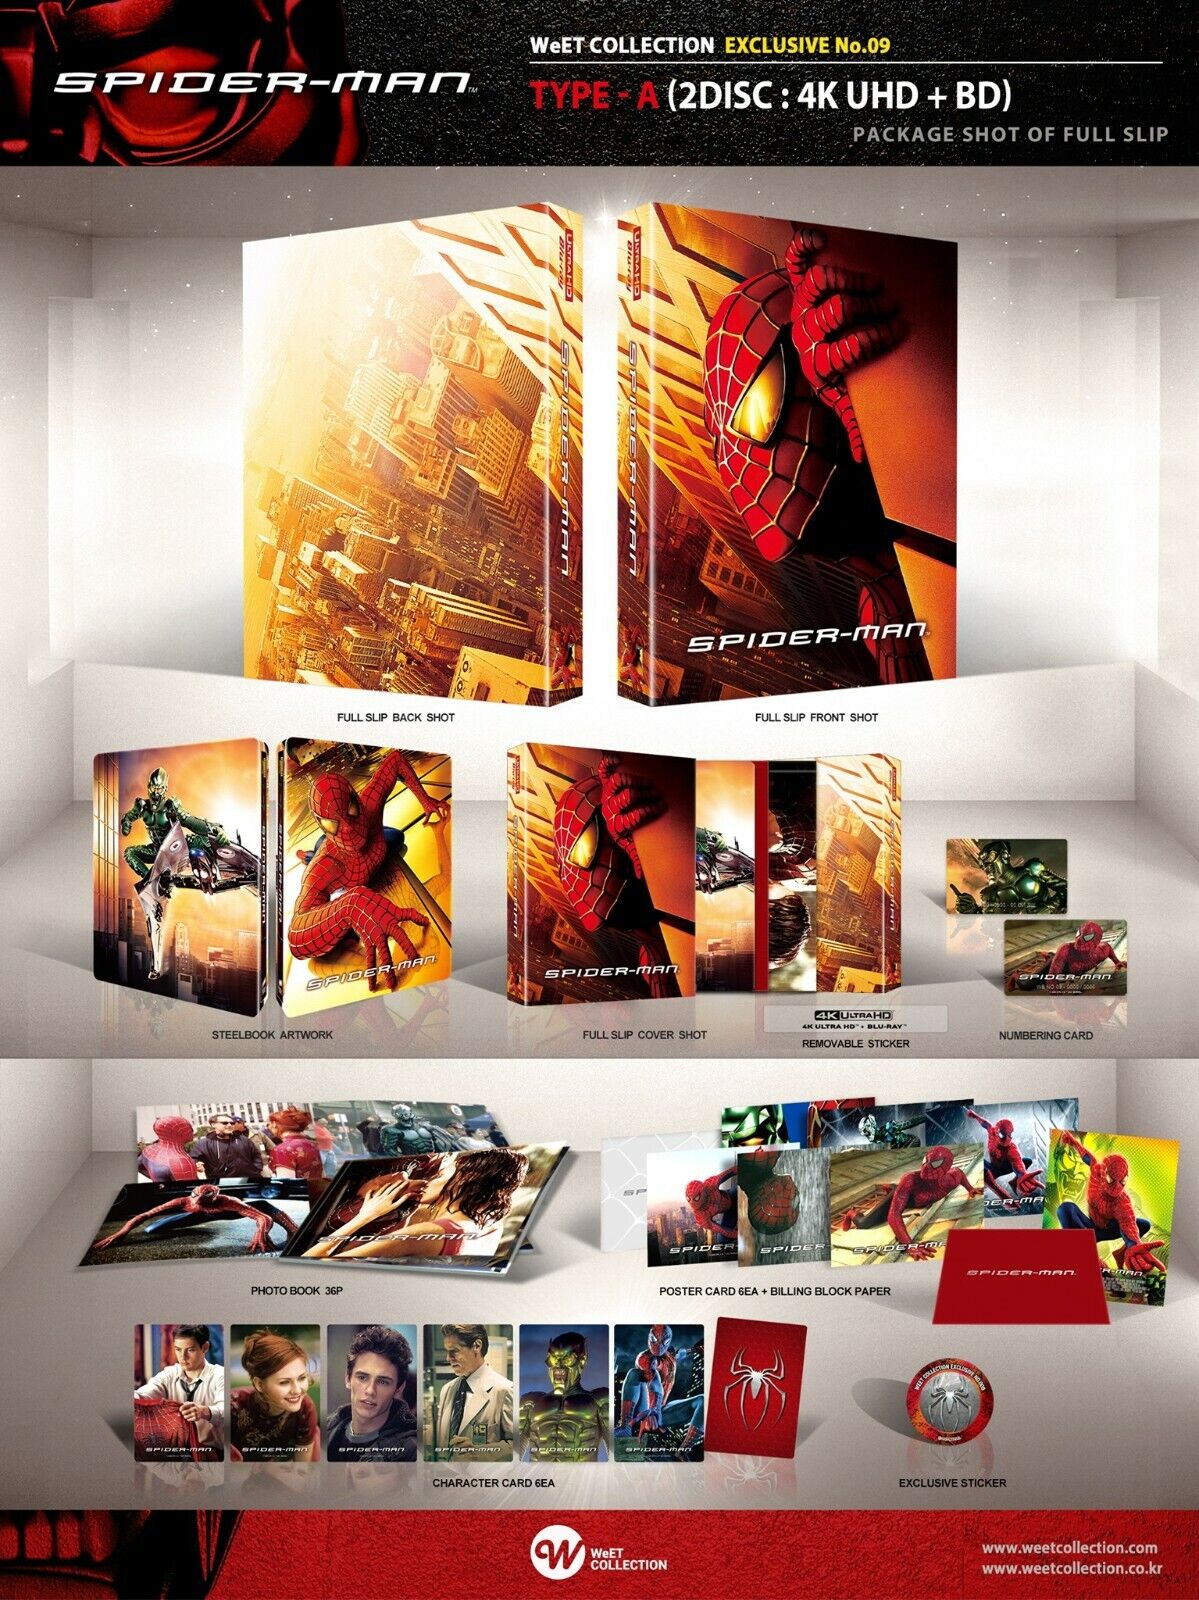 Spider-Man 1 4K+2D Blu-ray Steelbook WeET Collection Exclusive #9 Full Slip